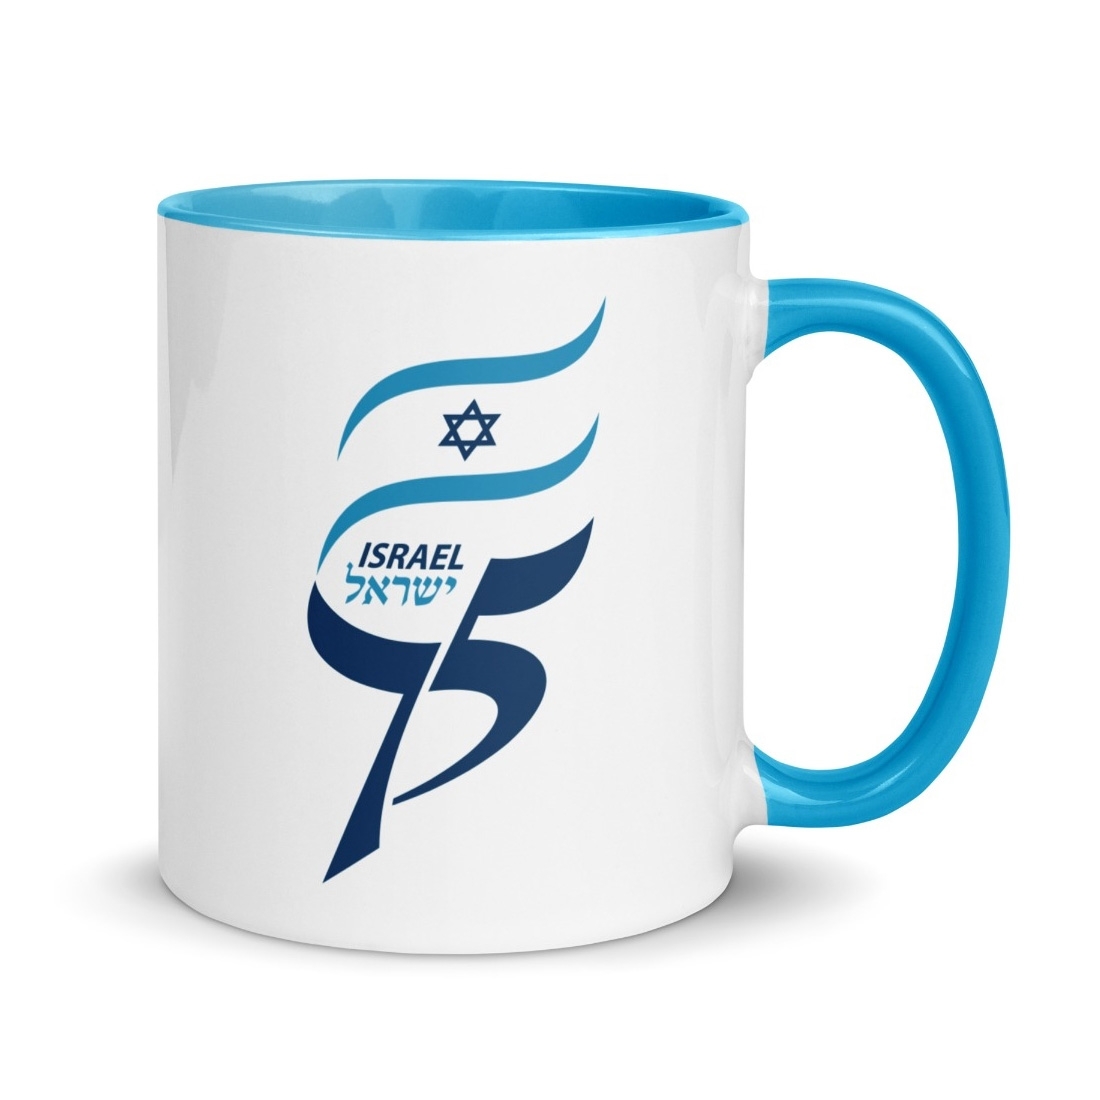 75 Years of Israeli Independence Mug - 1